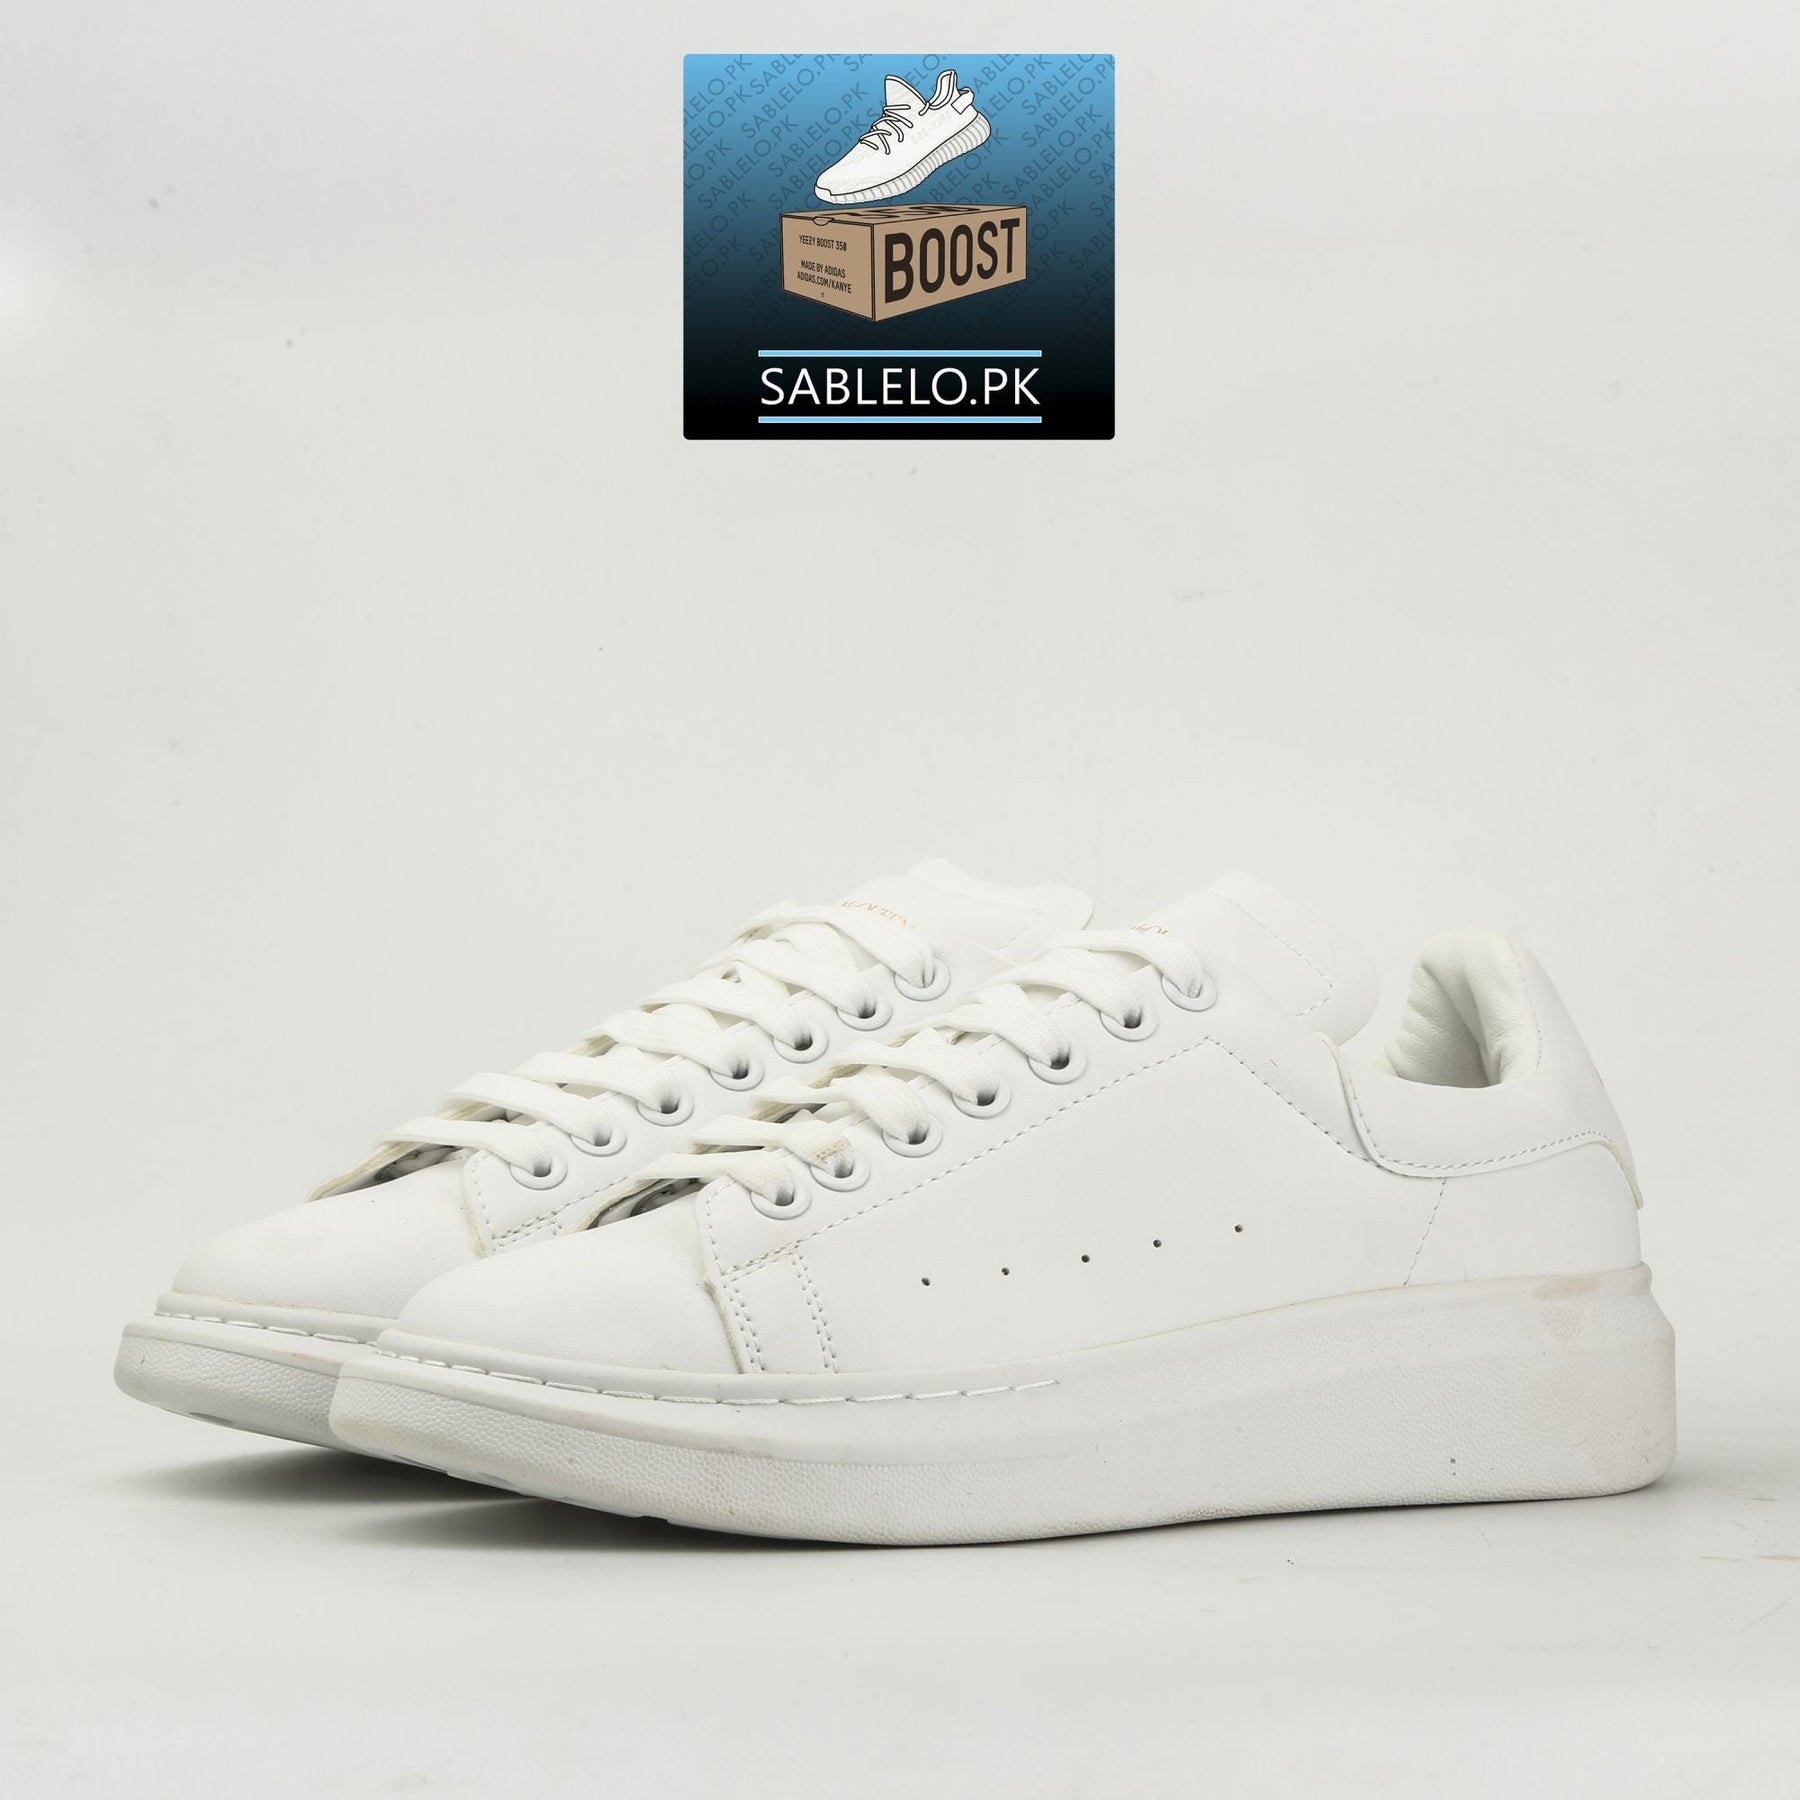 Alexander McQueen Triple White - Premium Shoes from Sablelo.pk - Just Rs.3999! Shop now at Sablelo.pk